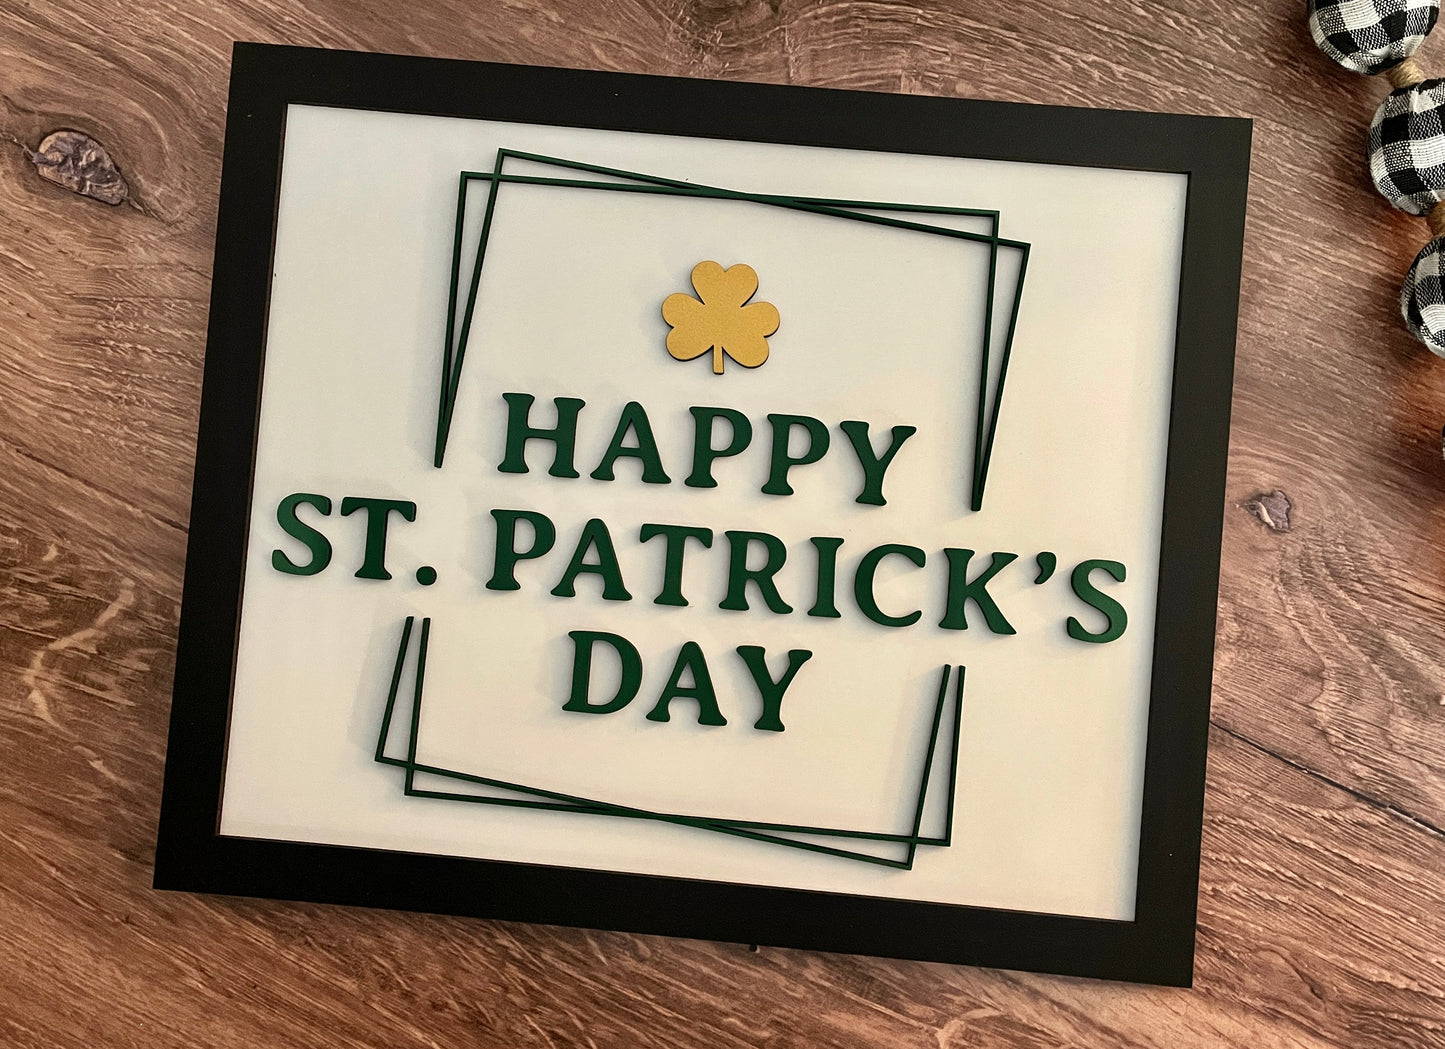 Happy St. Patrick's Day sign